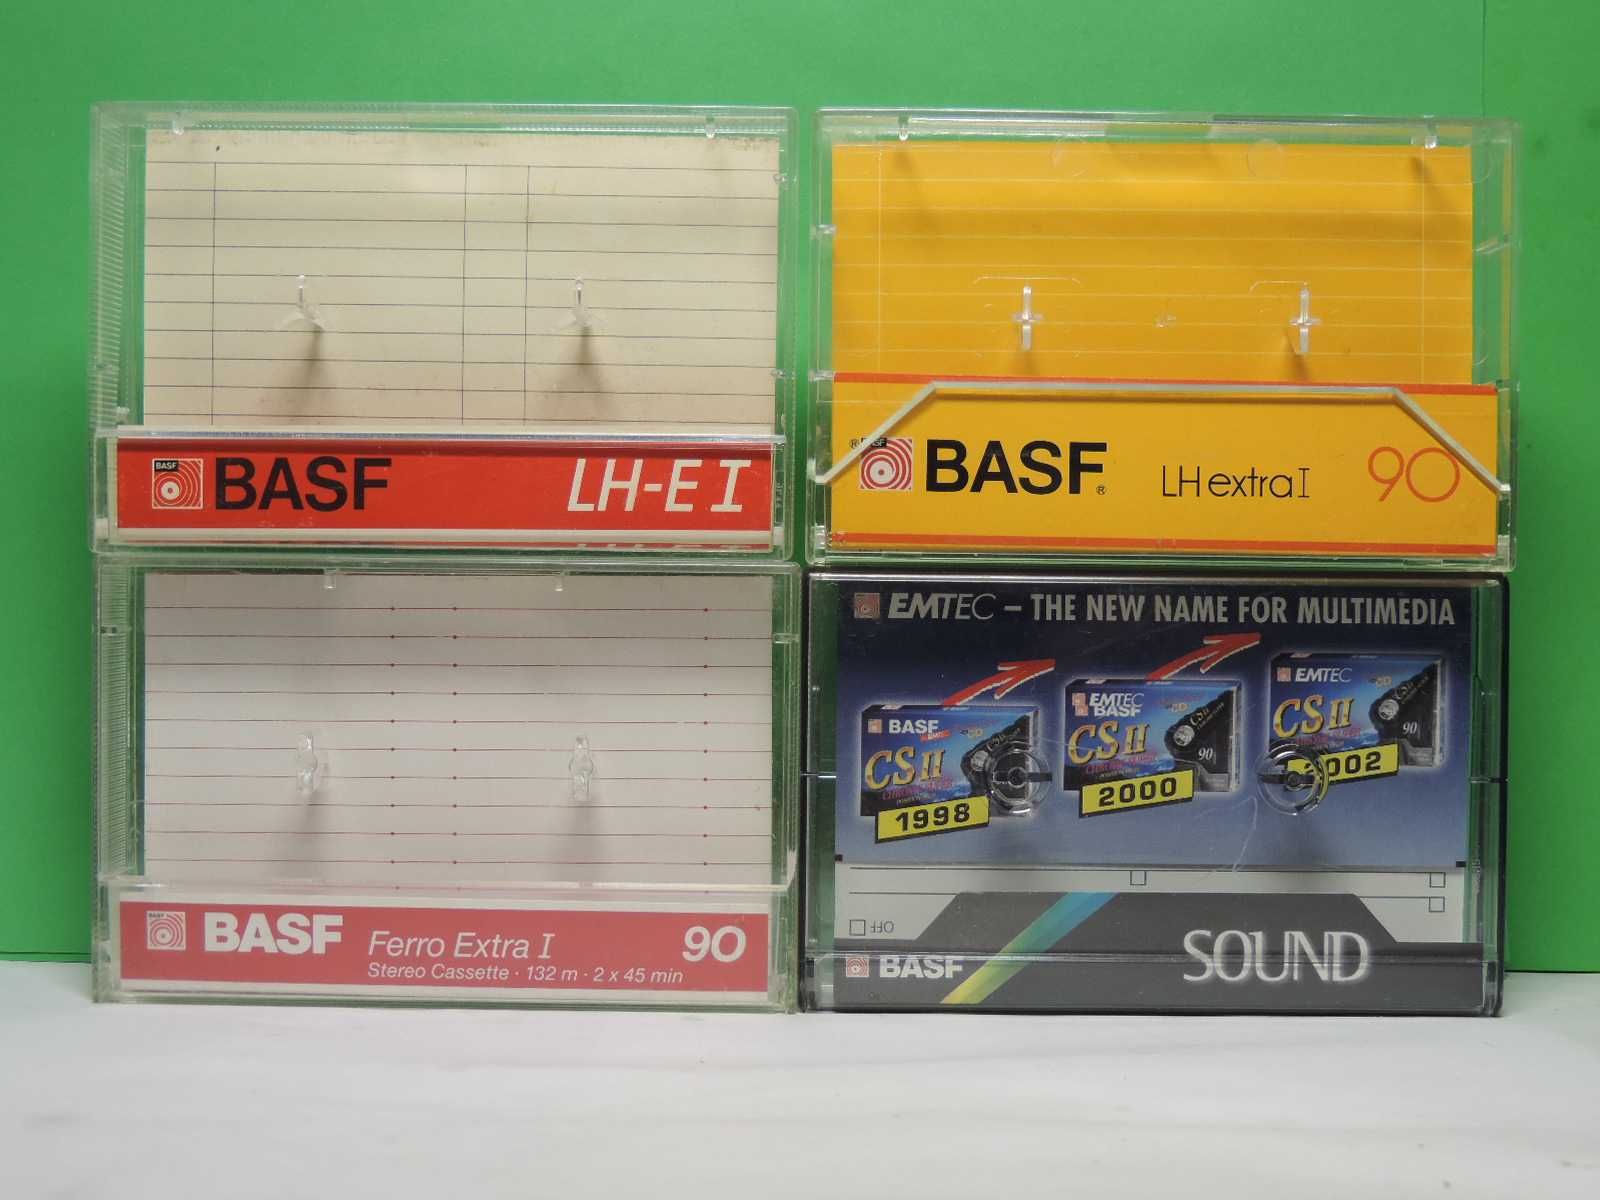 Аудиокассеты Top Mix Hits BASF 120-90-60 -4 шт -Germany